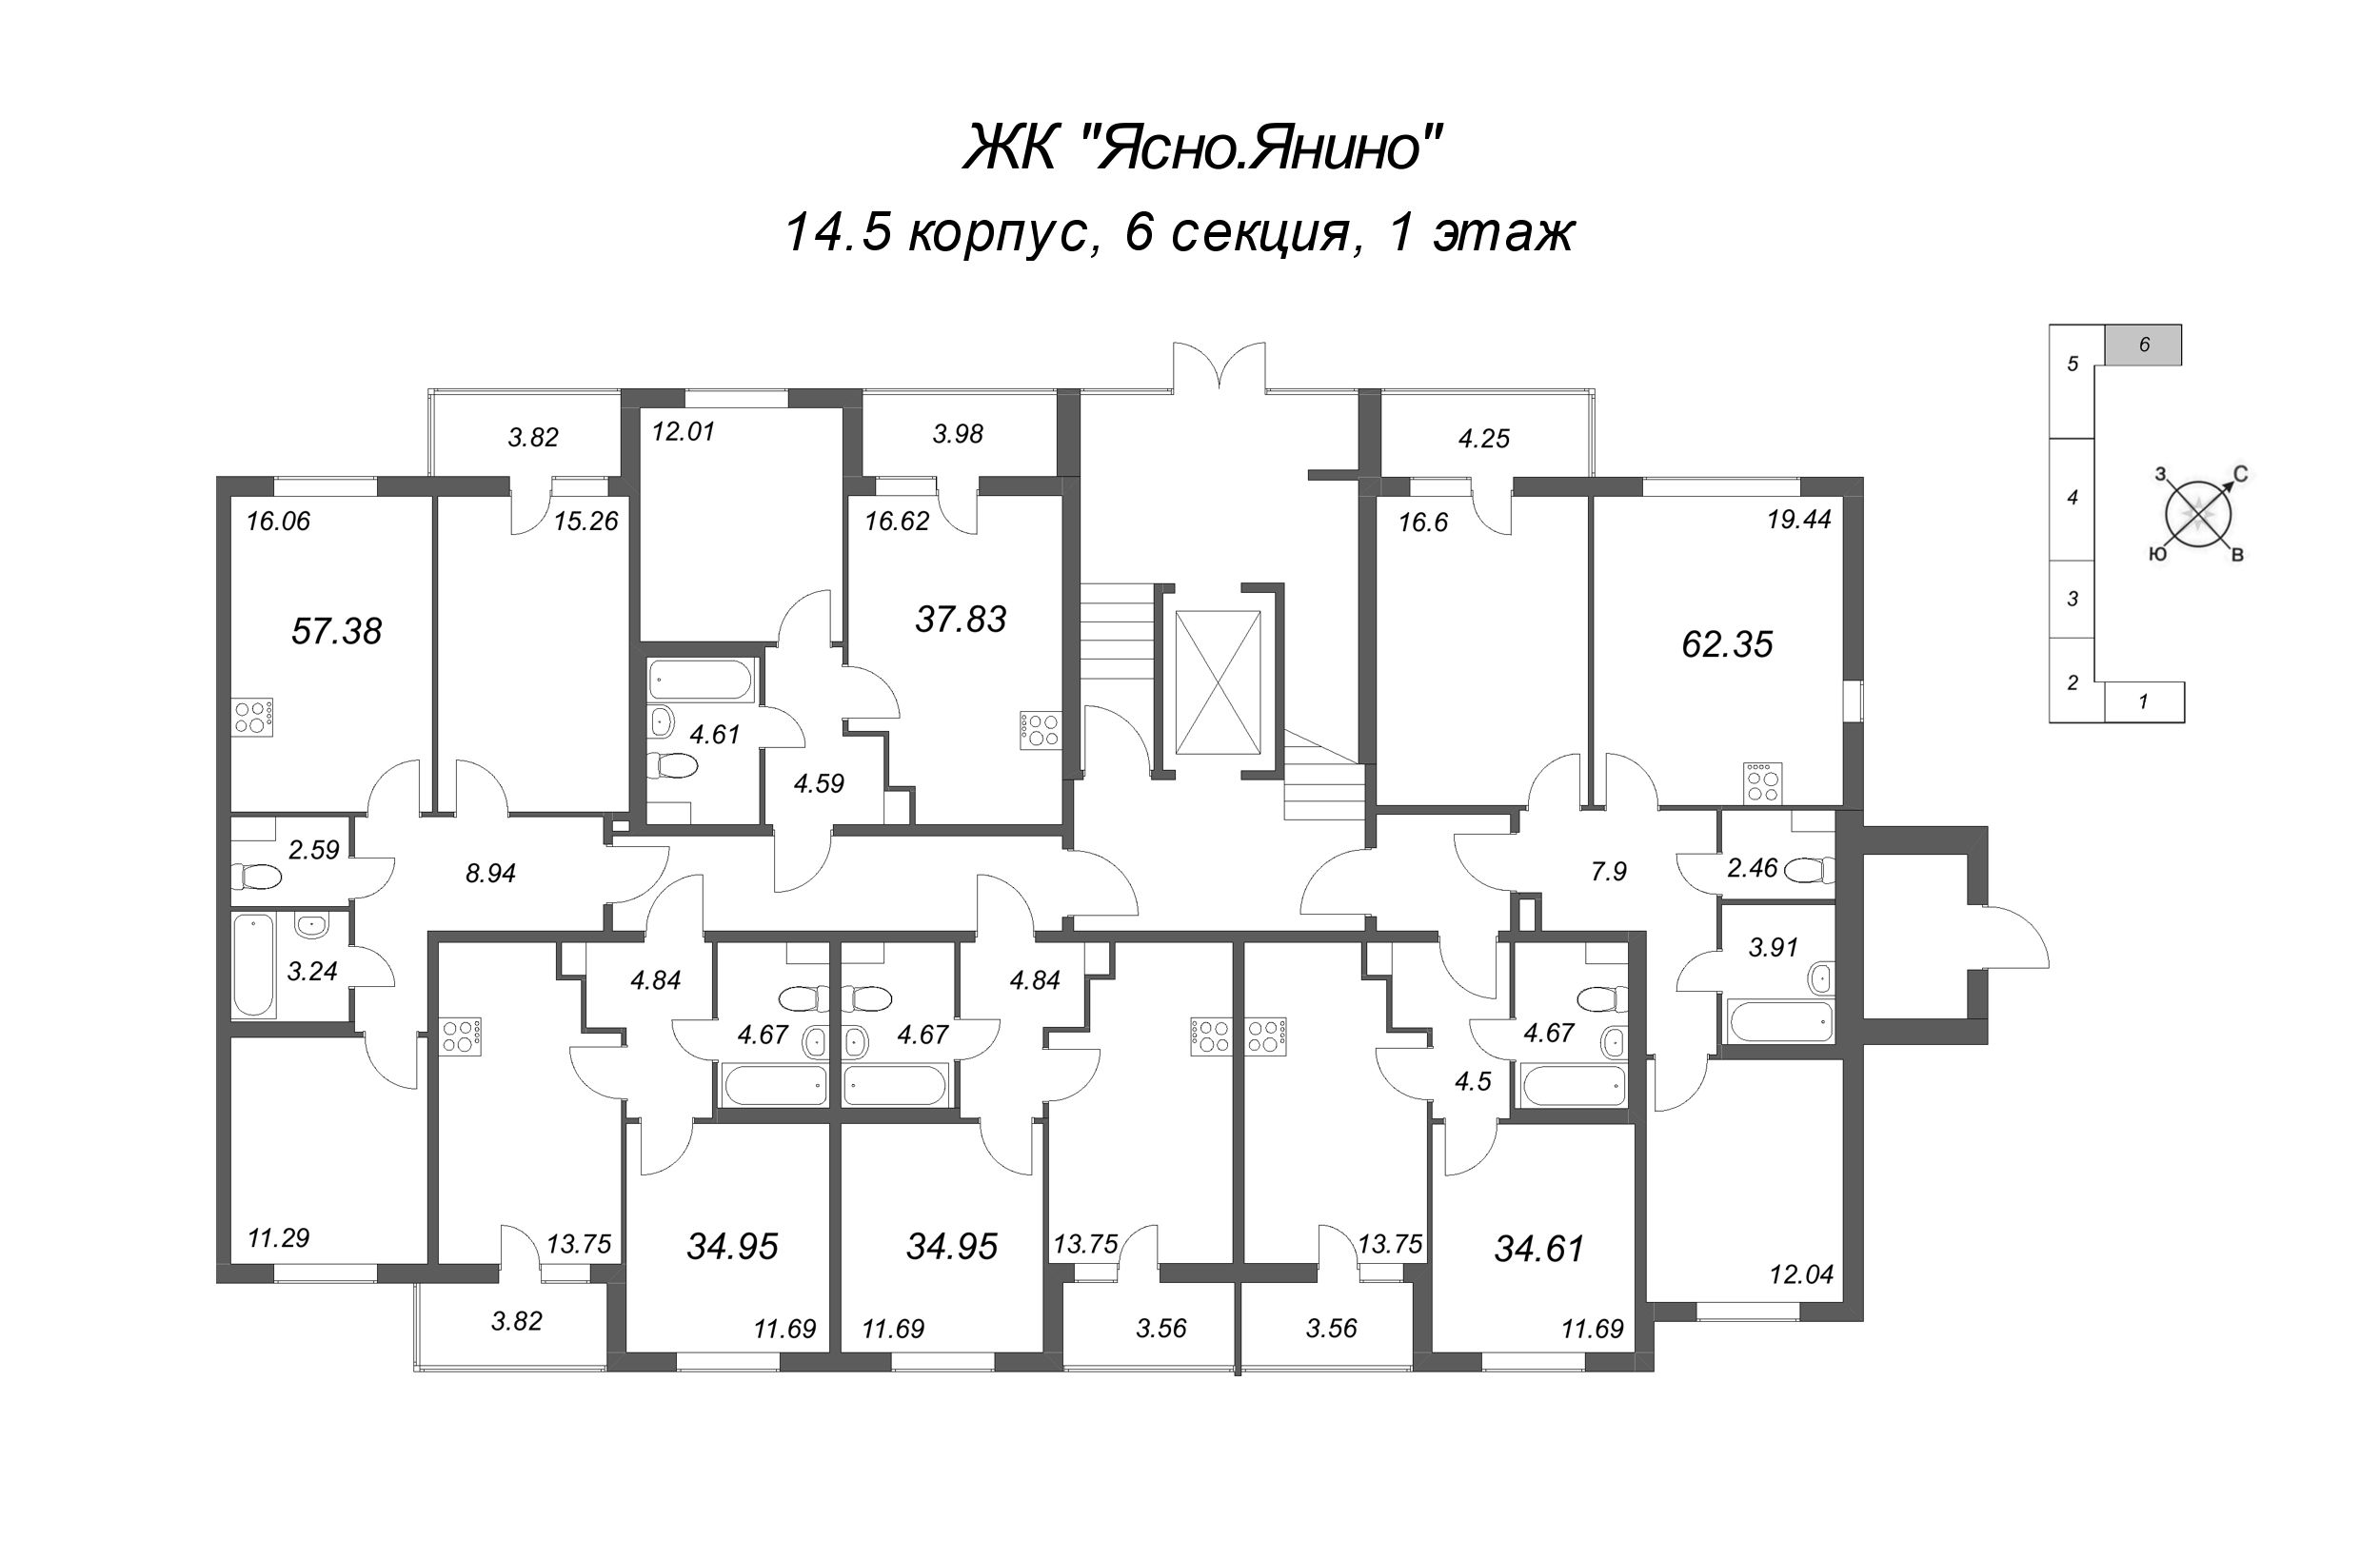 2-комнатная (Евро) квартира, 37.83 м² - планировка этажа